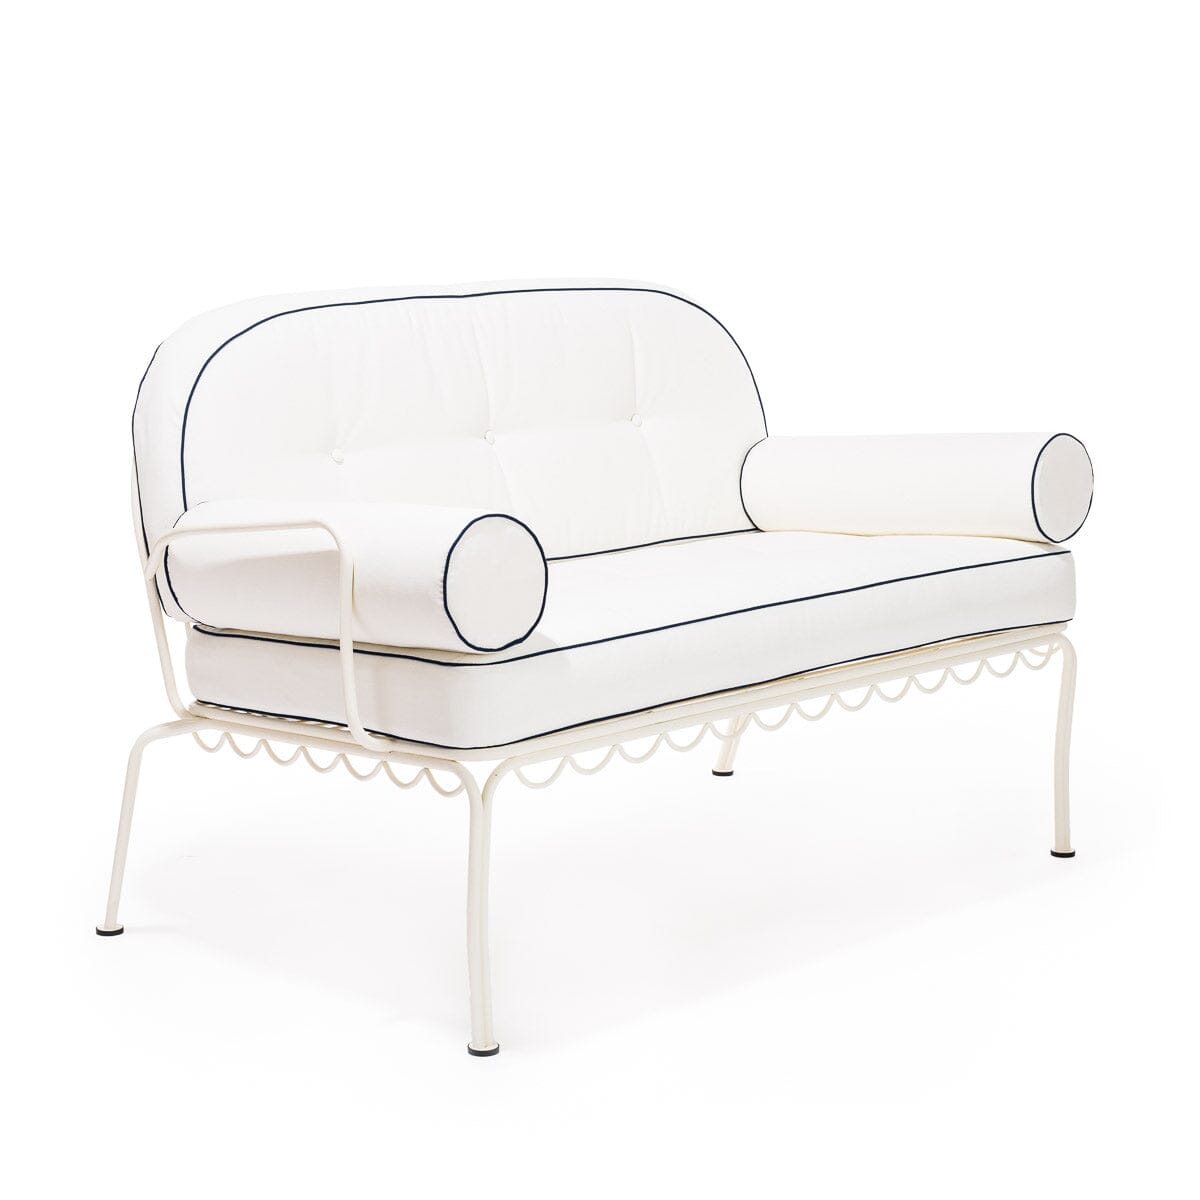 The Al Fresco Love Seat Cushion Set - Rivie White Al Fresco Love Seat Cushion Set Business & Pleasure Co 